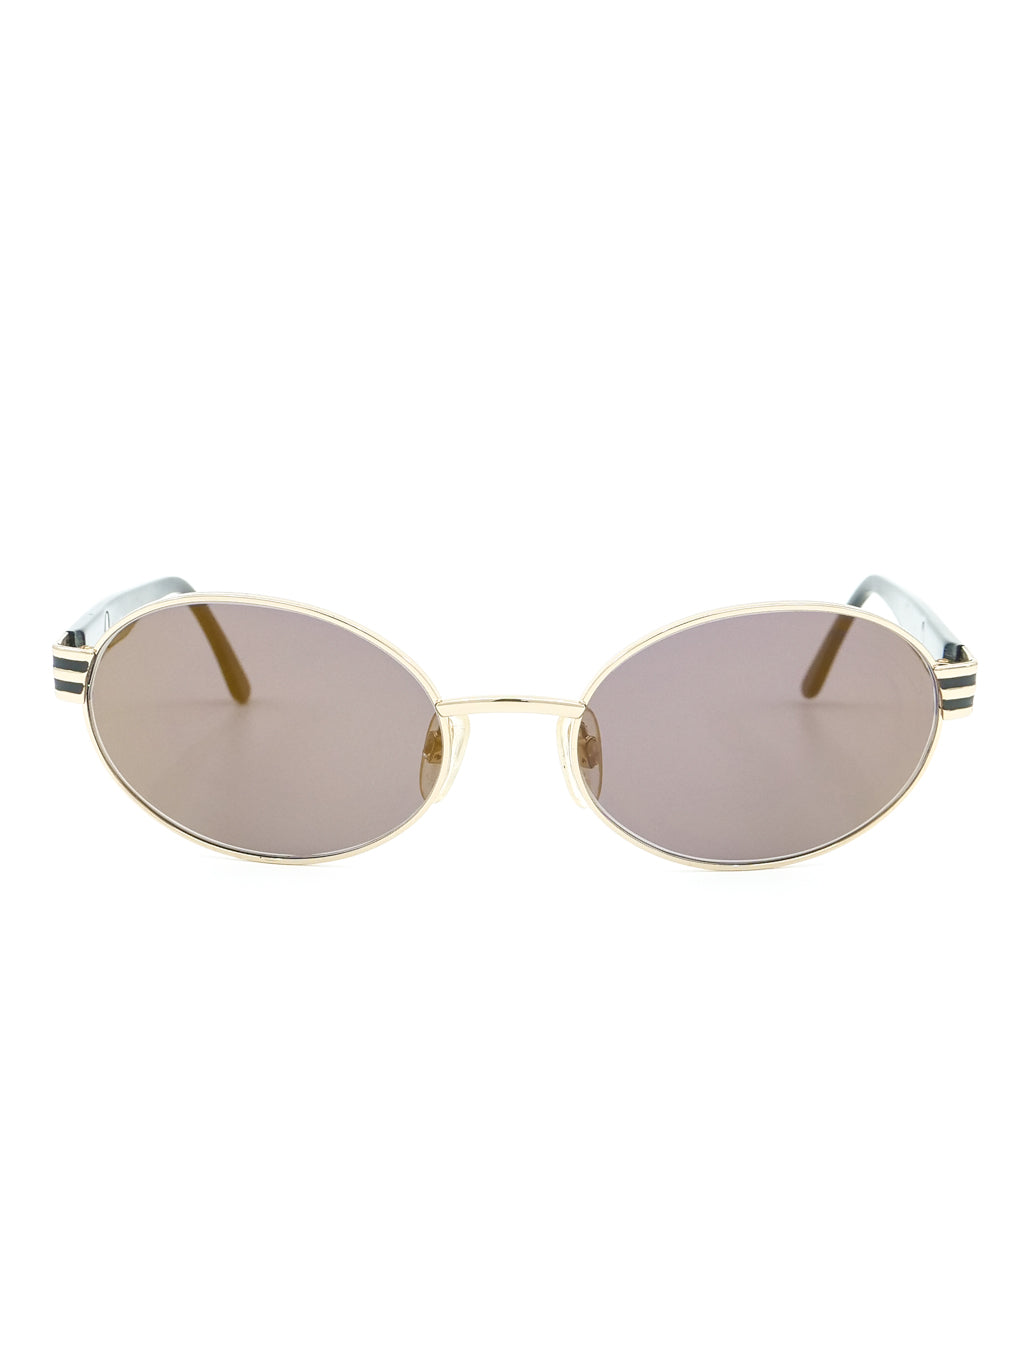 Yves Saint Laurent Oval Wireframe Sunglasses